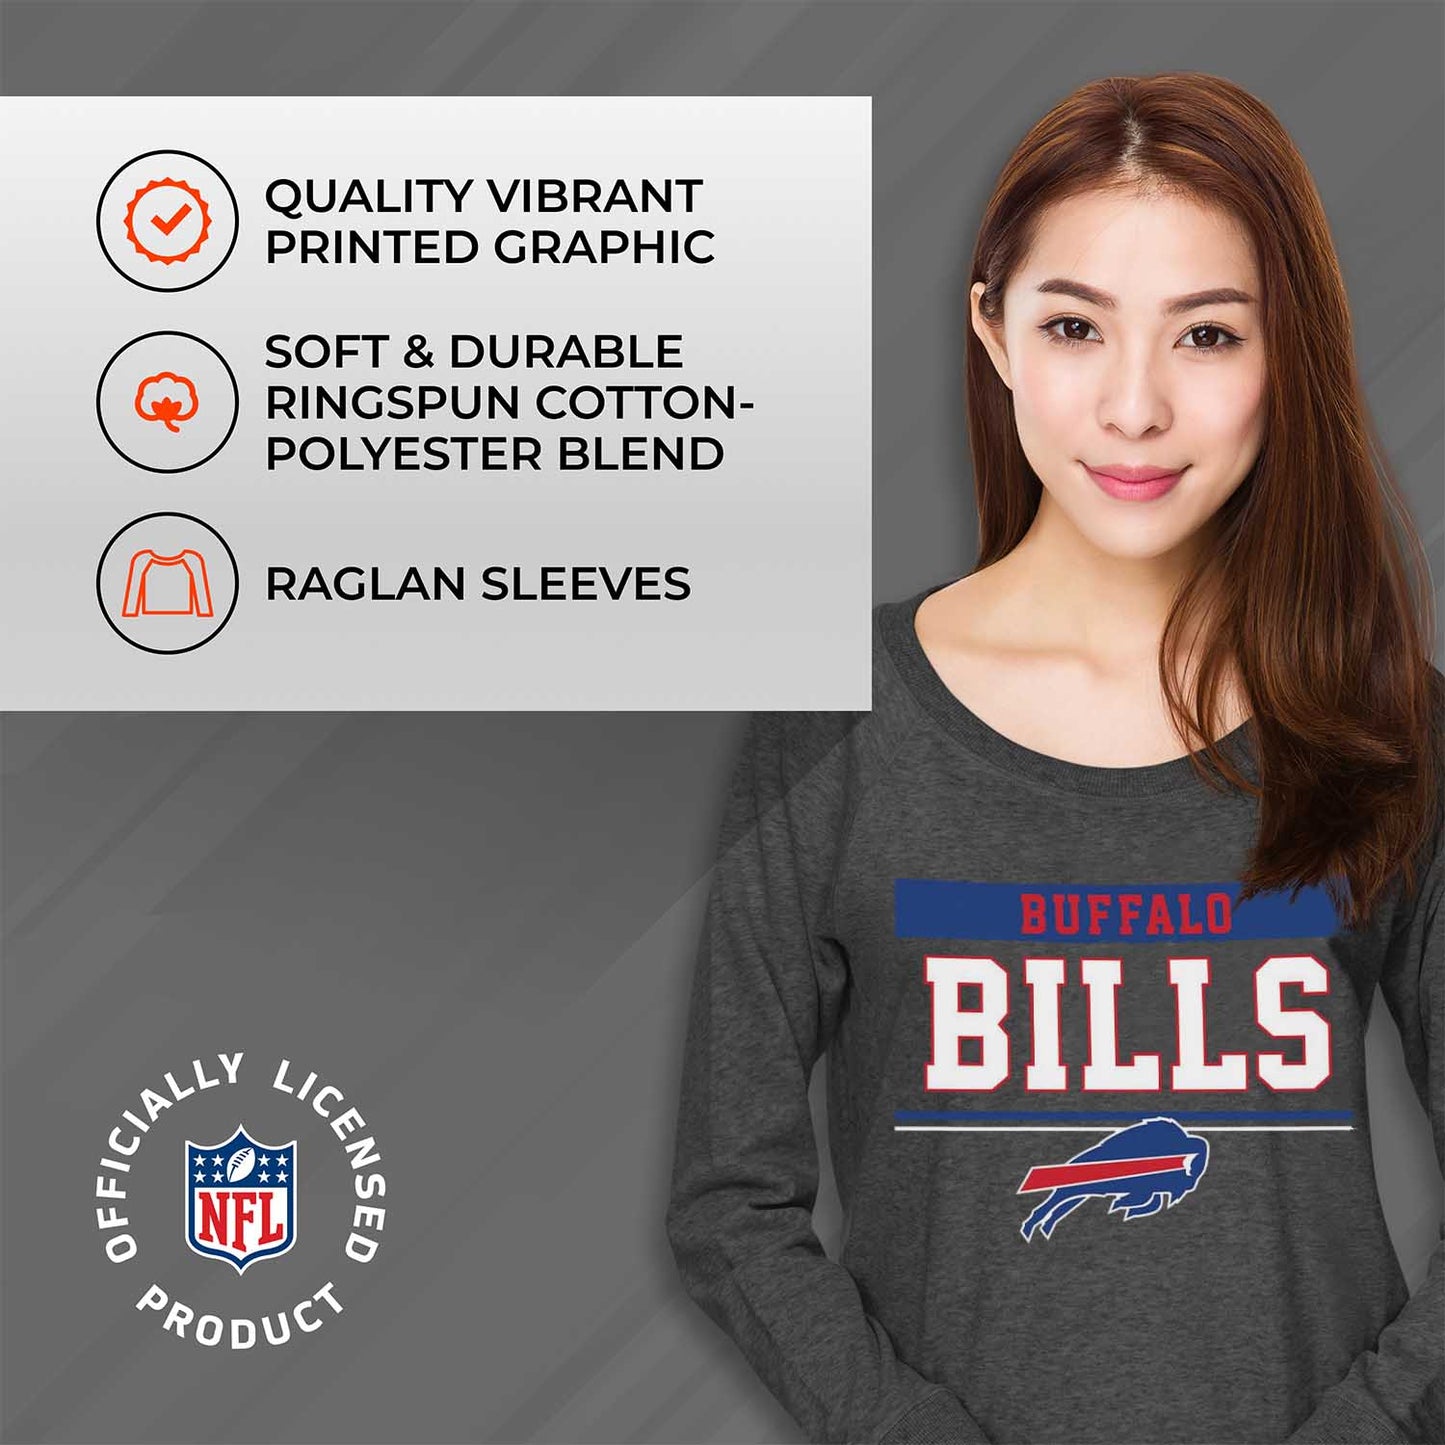 Buffalo Bills NFL Womens Charcoal Crew Neck Football Apparel - Charcoal